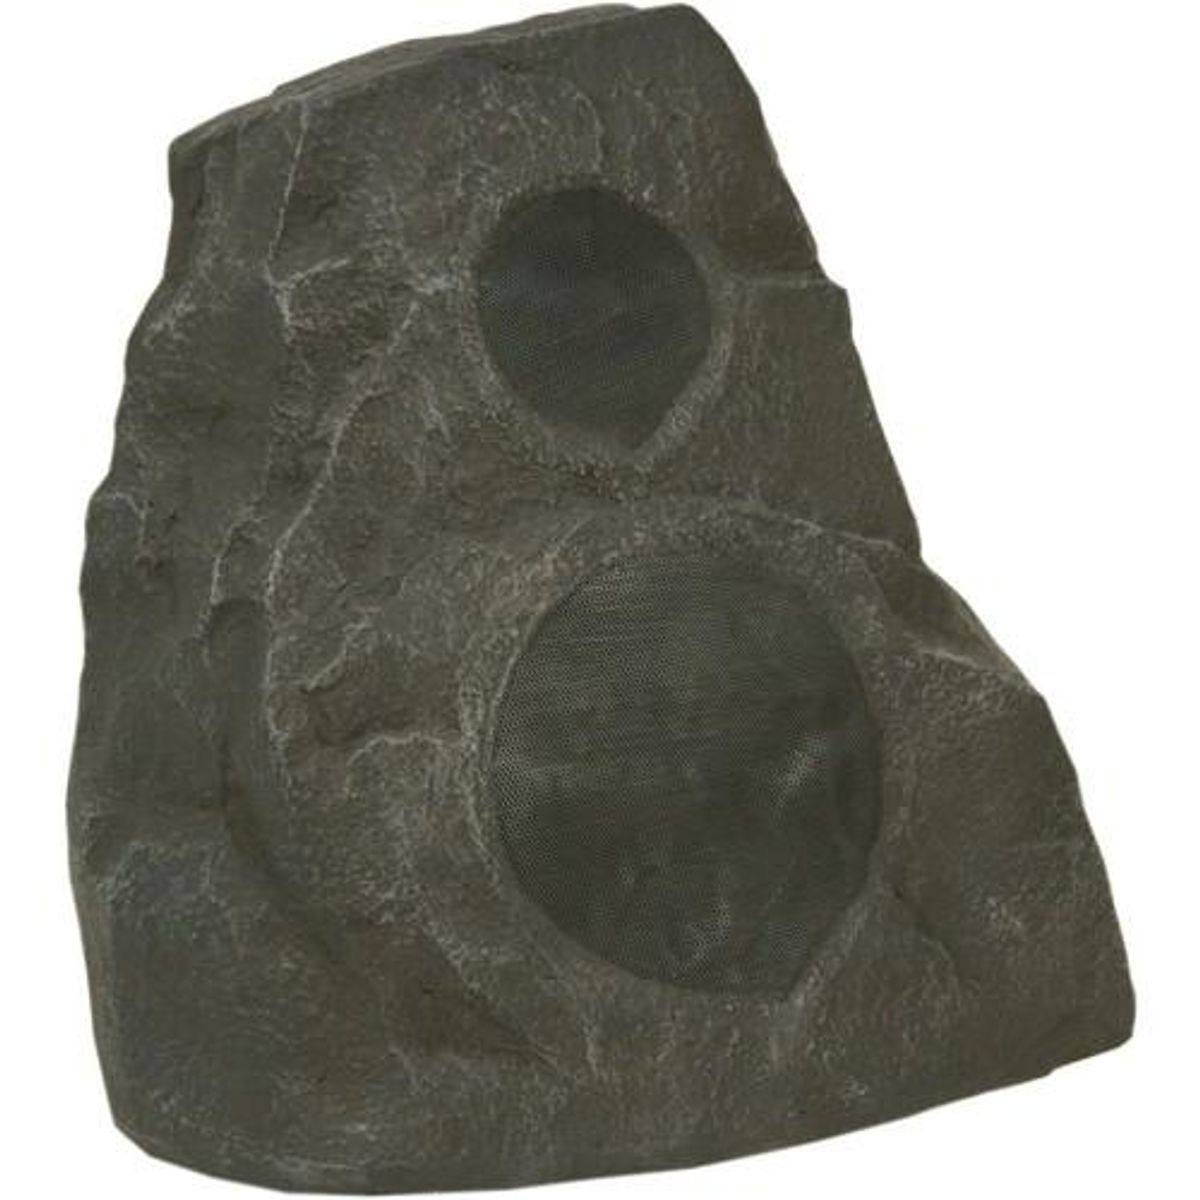 AWR-650-SM Granite Outdoor Rock Speaker